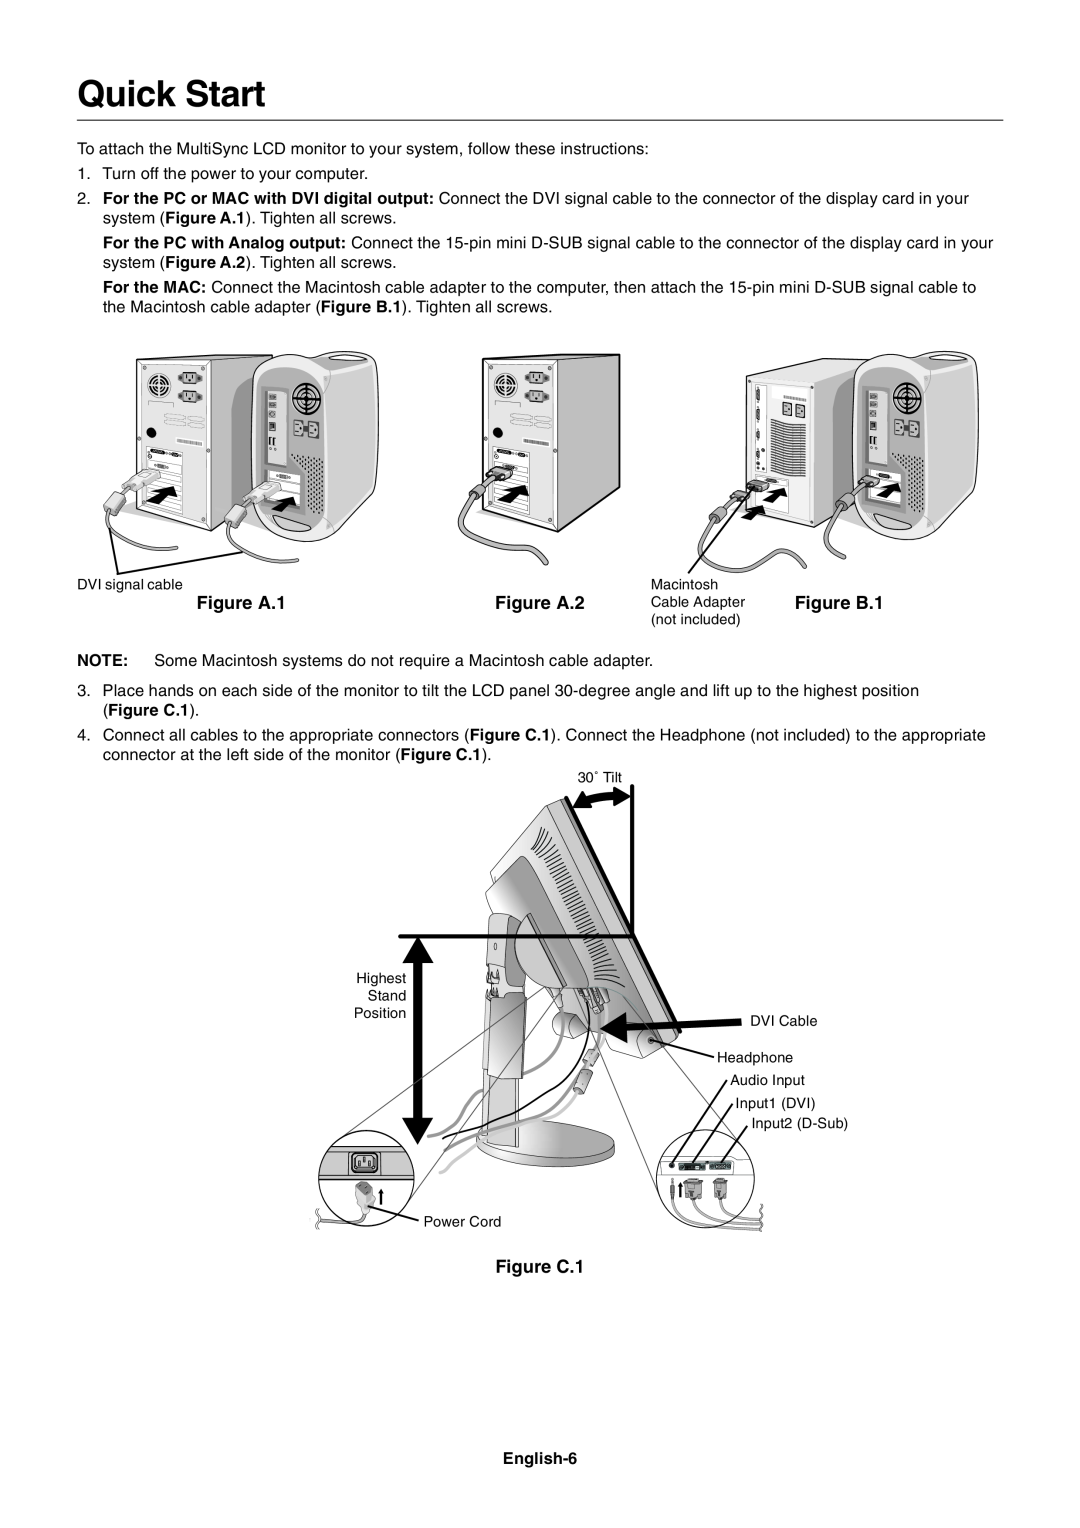 NEC EA191M-BK user manual Quick Start, Figure A.1, Figure A.2, Figure C.1, English-6 